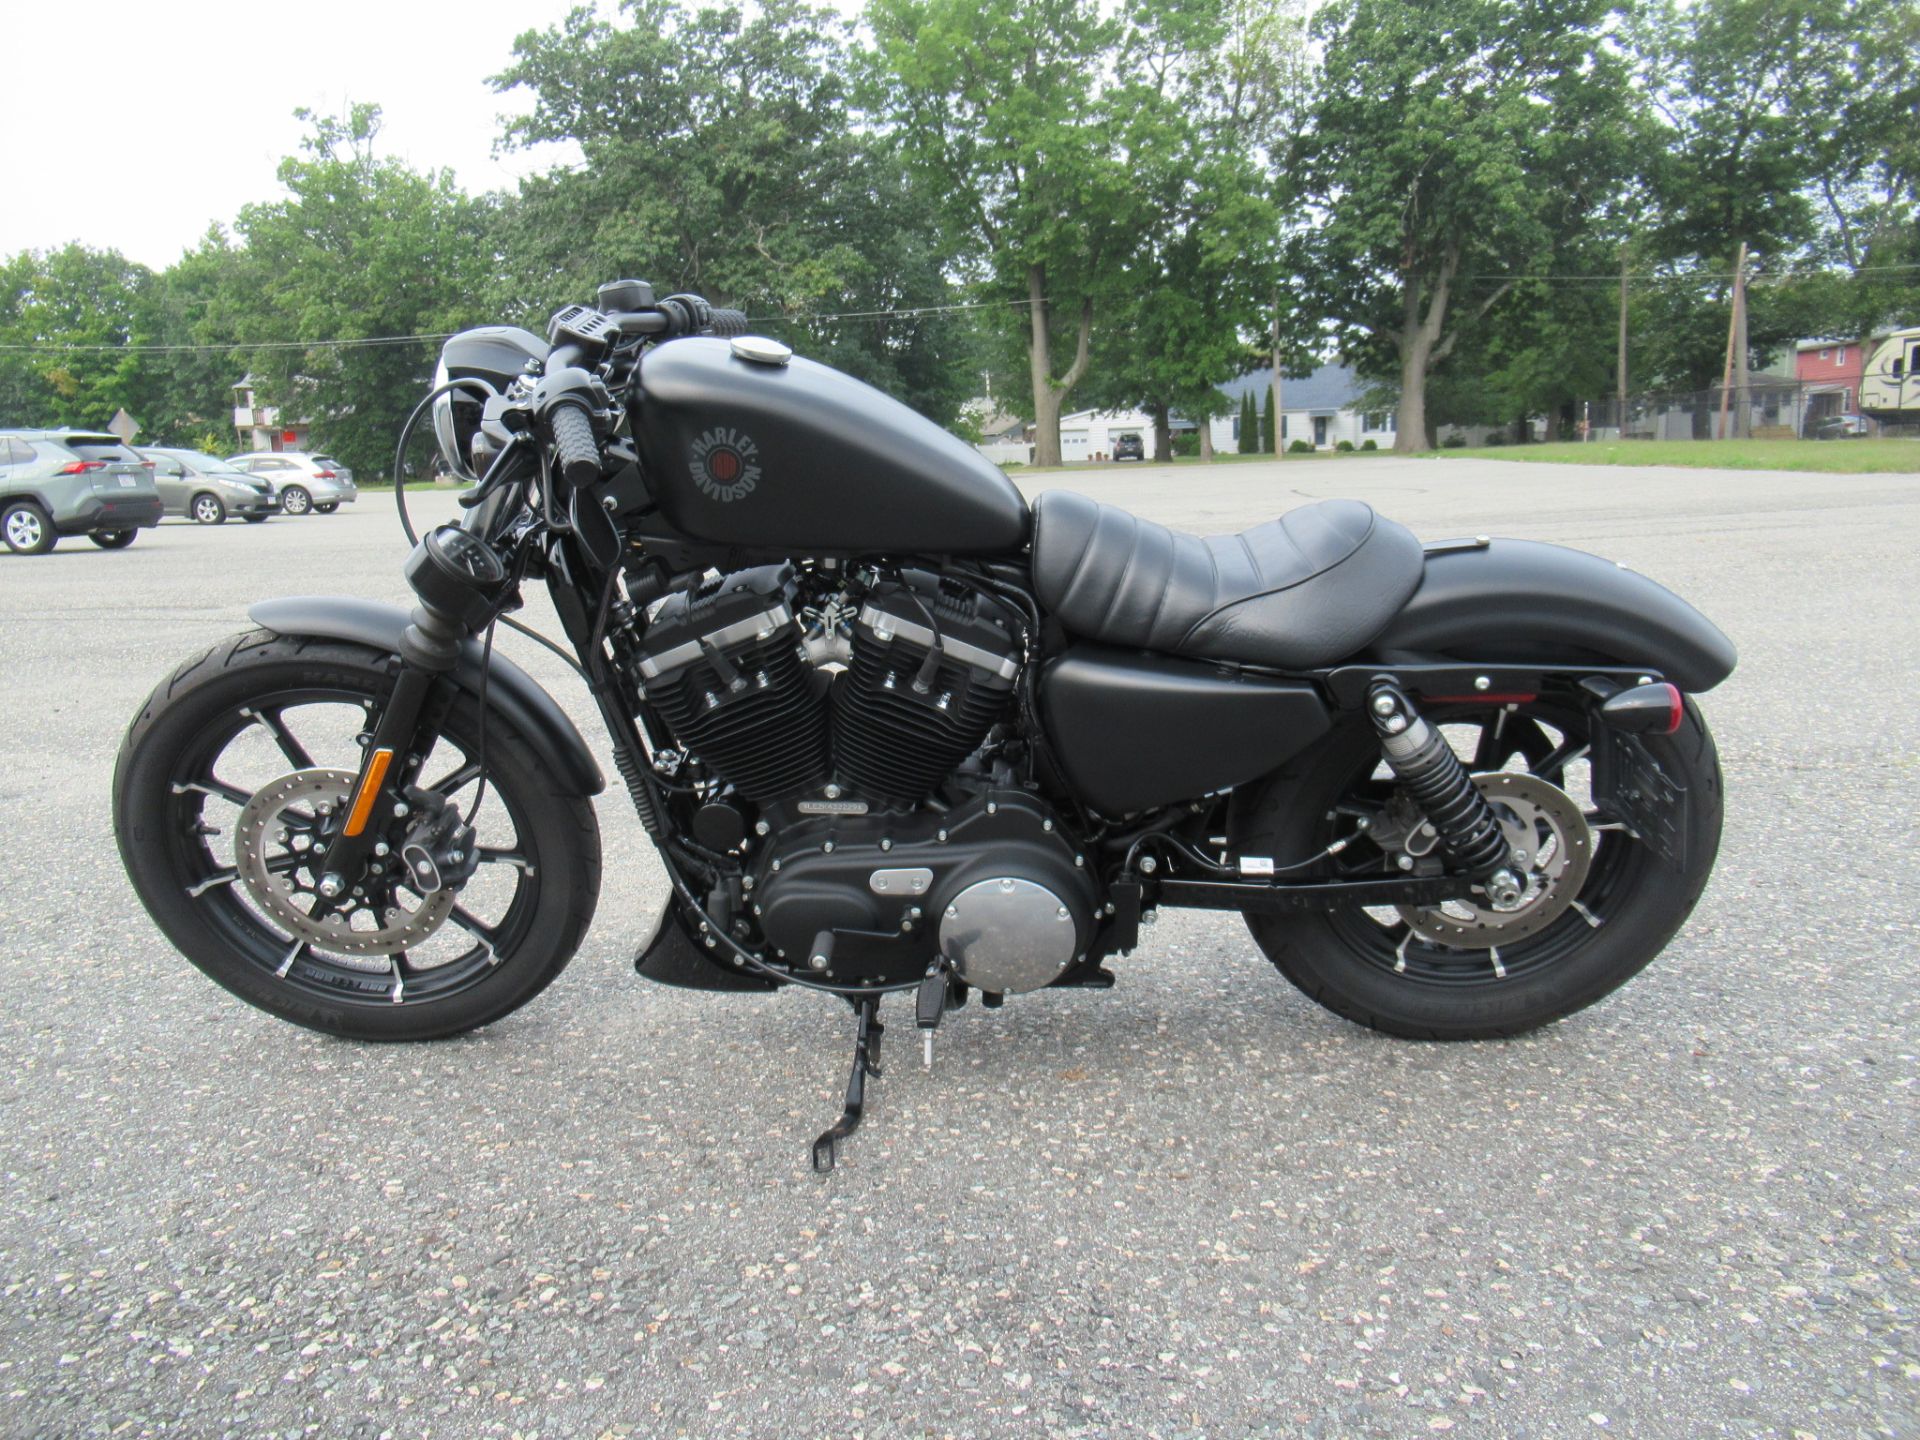 2019 Harley-Davidson Iron 883™ in Springfield, Massachusetts - Photo 5